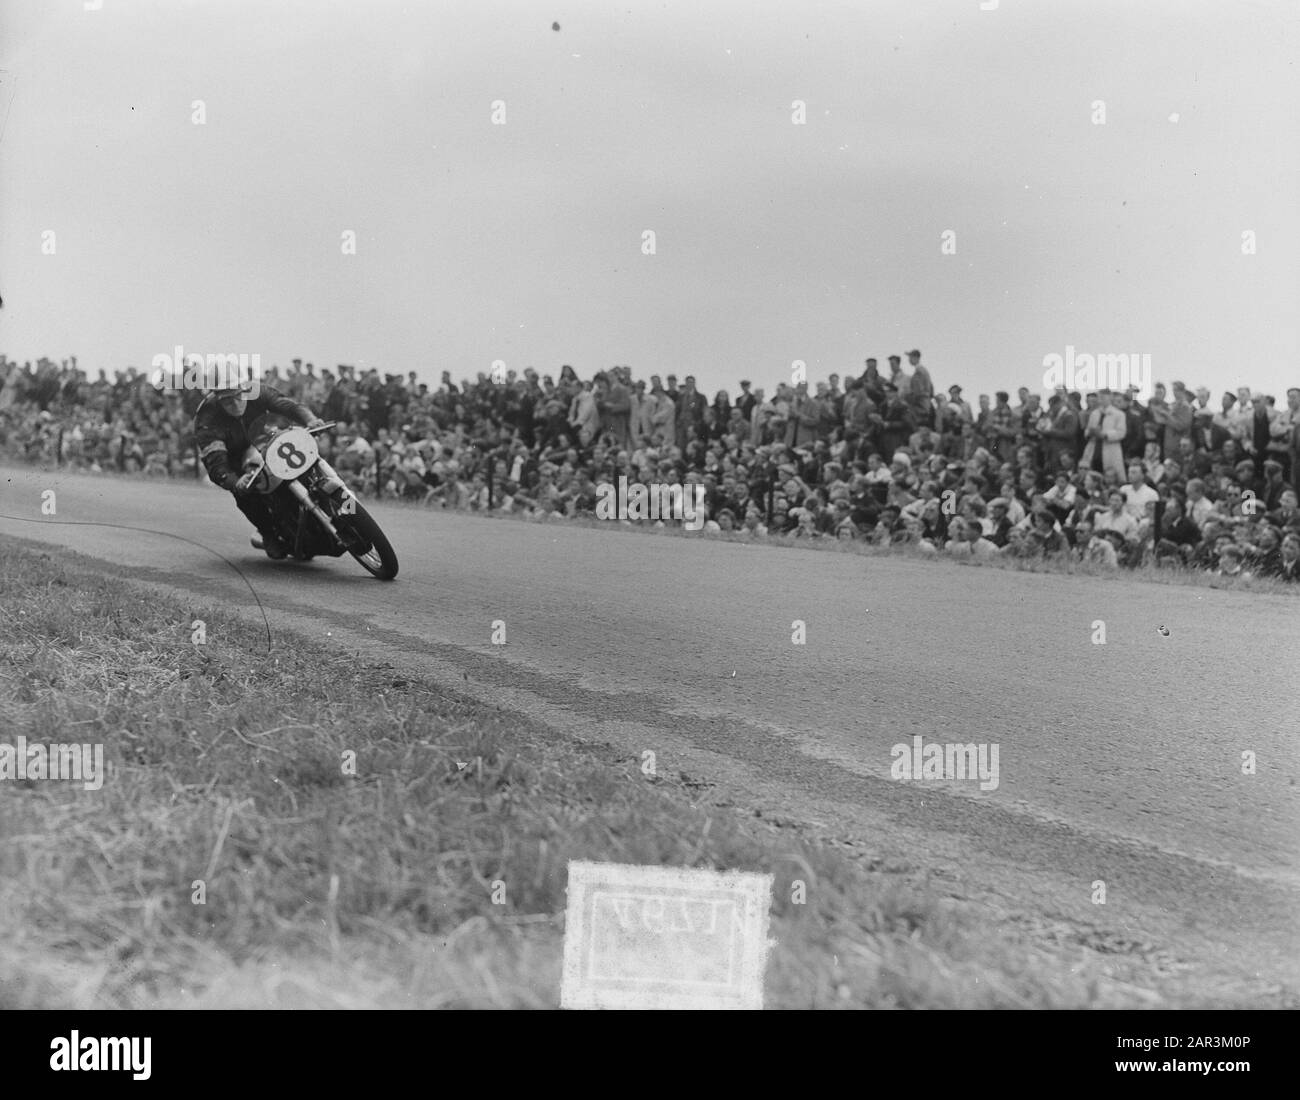 TT Assen 1951  TT-races in Assen. Geoff Duke in the turn 500 cc Date: 7 July 1951 Location: Axis Keywords: motorsport Person name: Duke, Geoff Institution name: TT Stock Photo